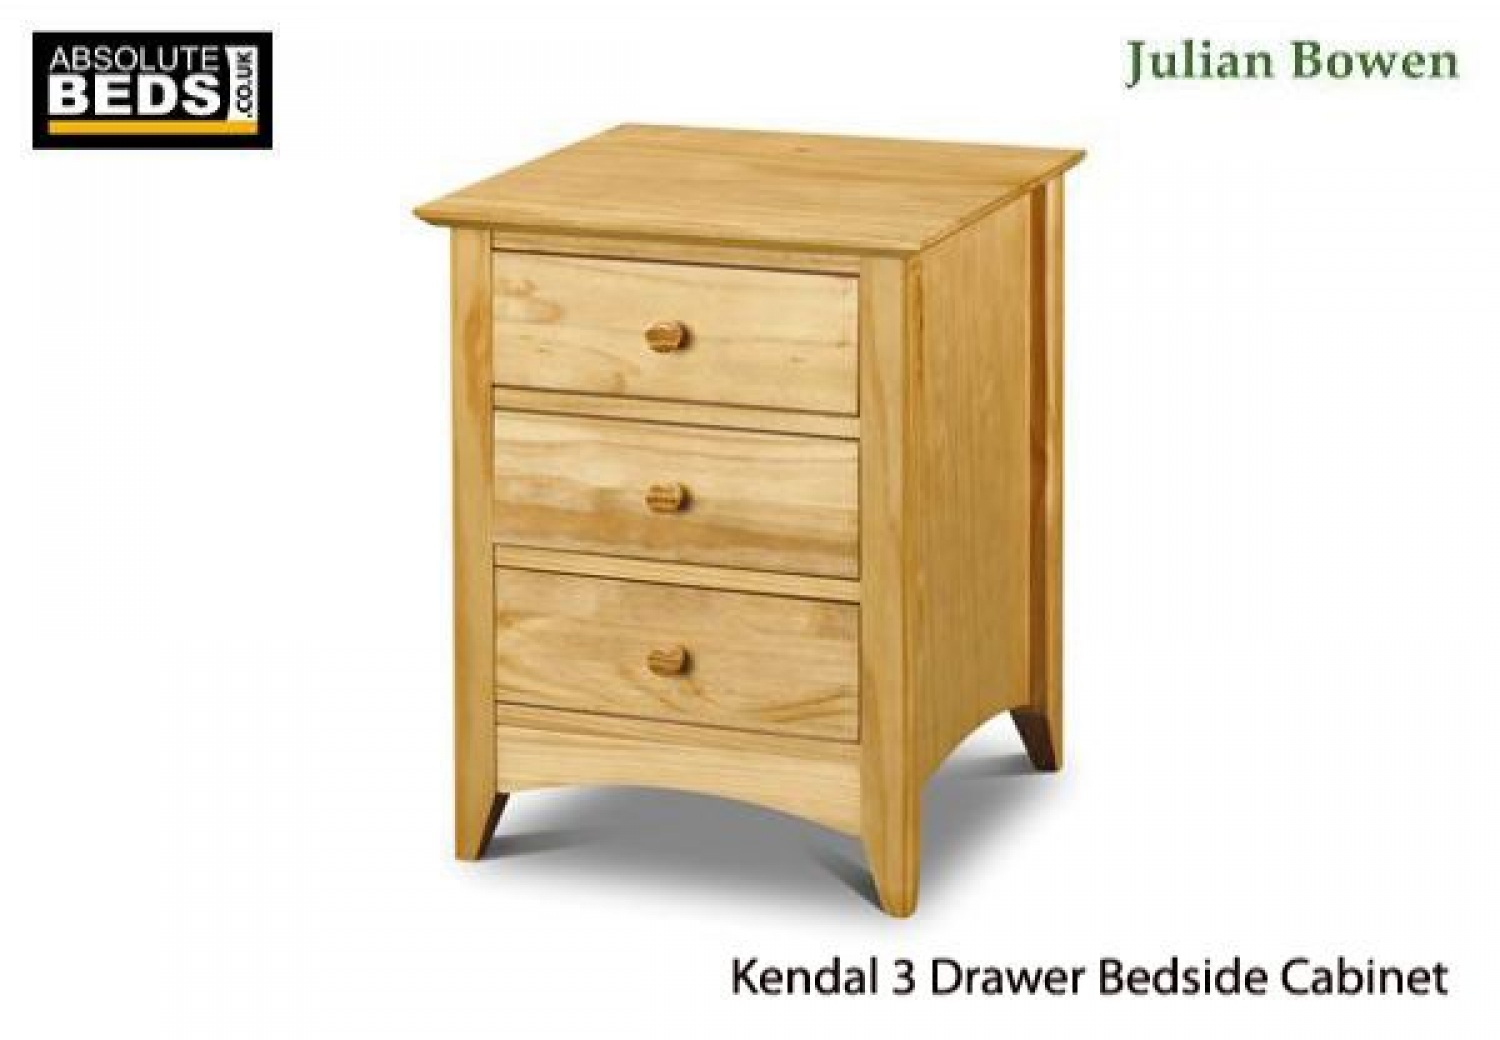 julian bowen kendal 3 drawer bedside cabinet image